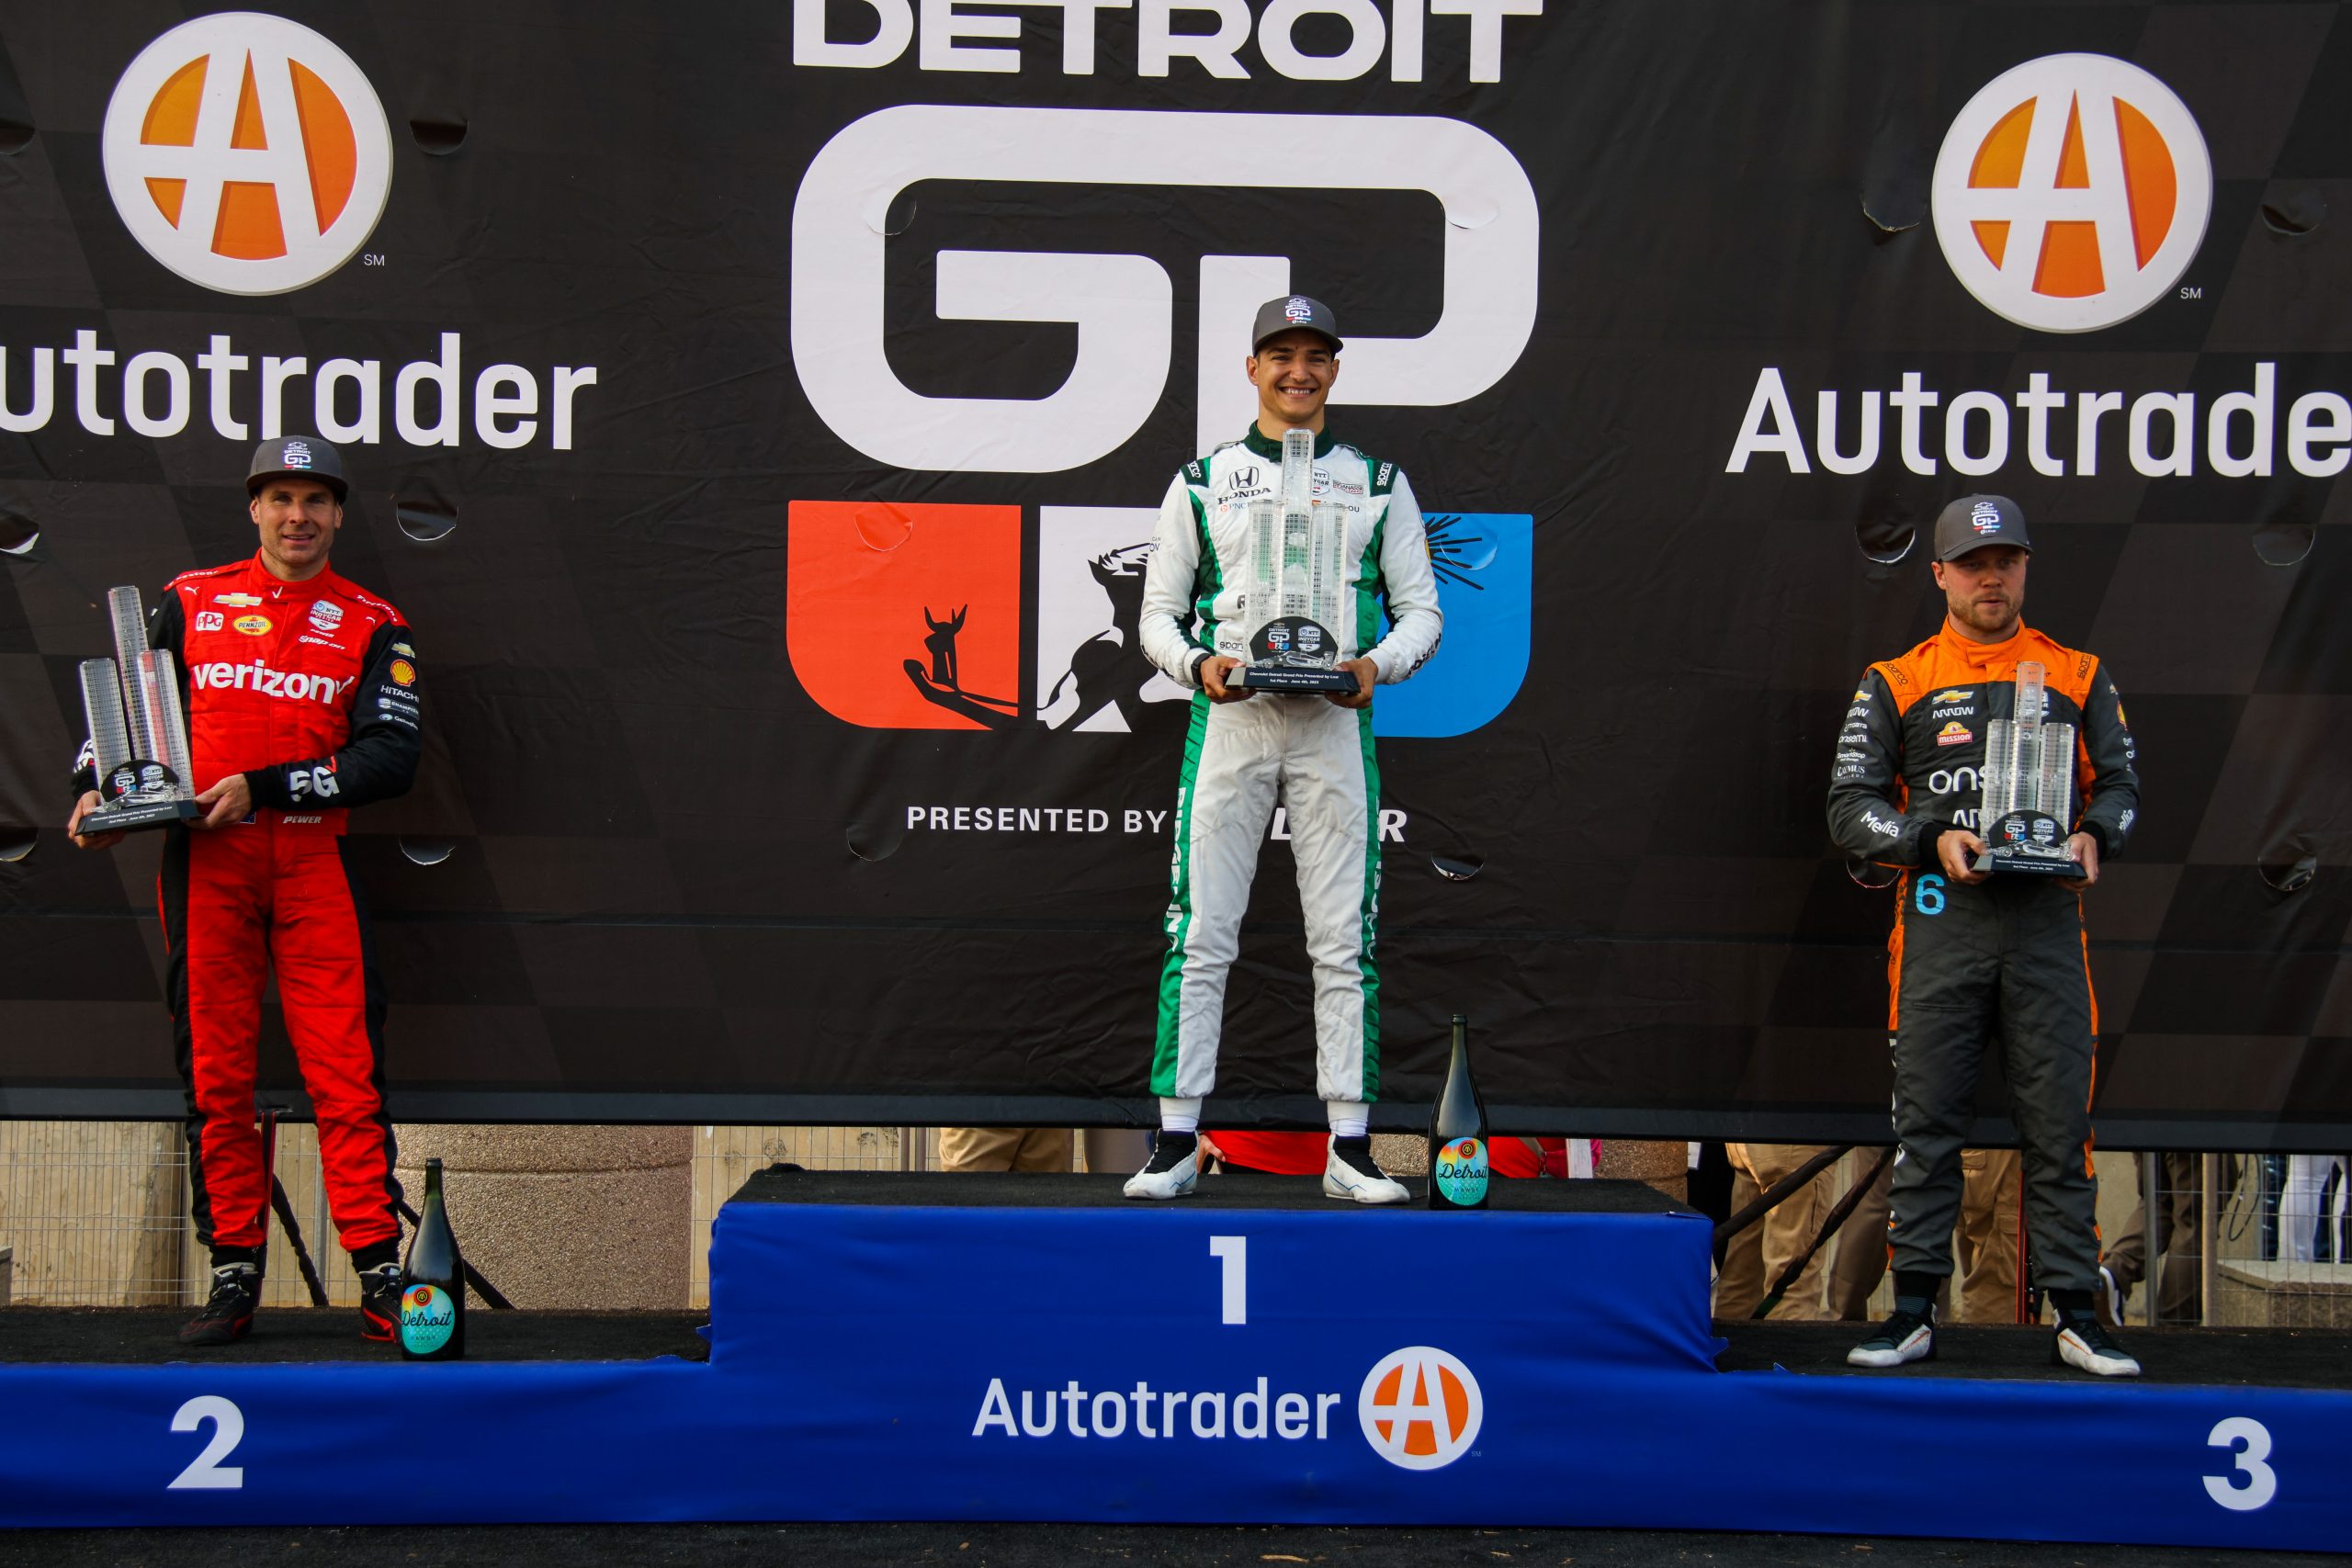 Palou stood proud and tall on the Autotrader podium in Detroit. (Photo: Wayne Riegle | The Podium Finish)